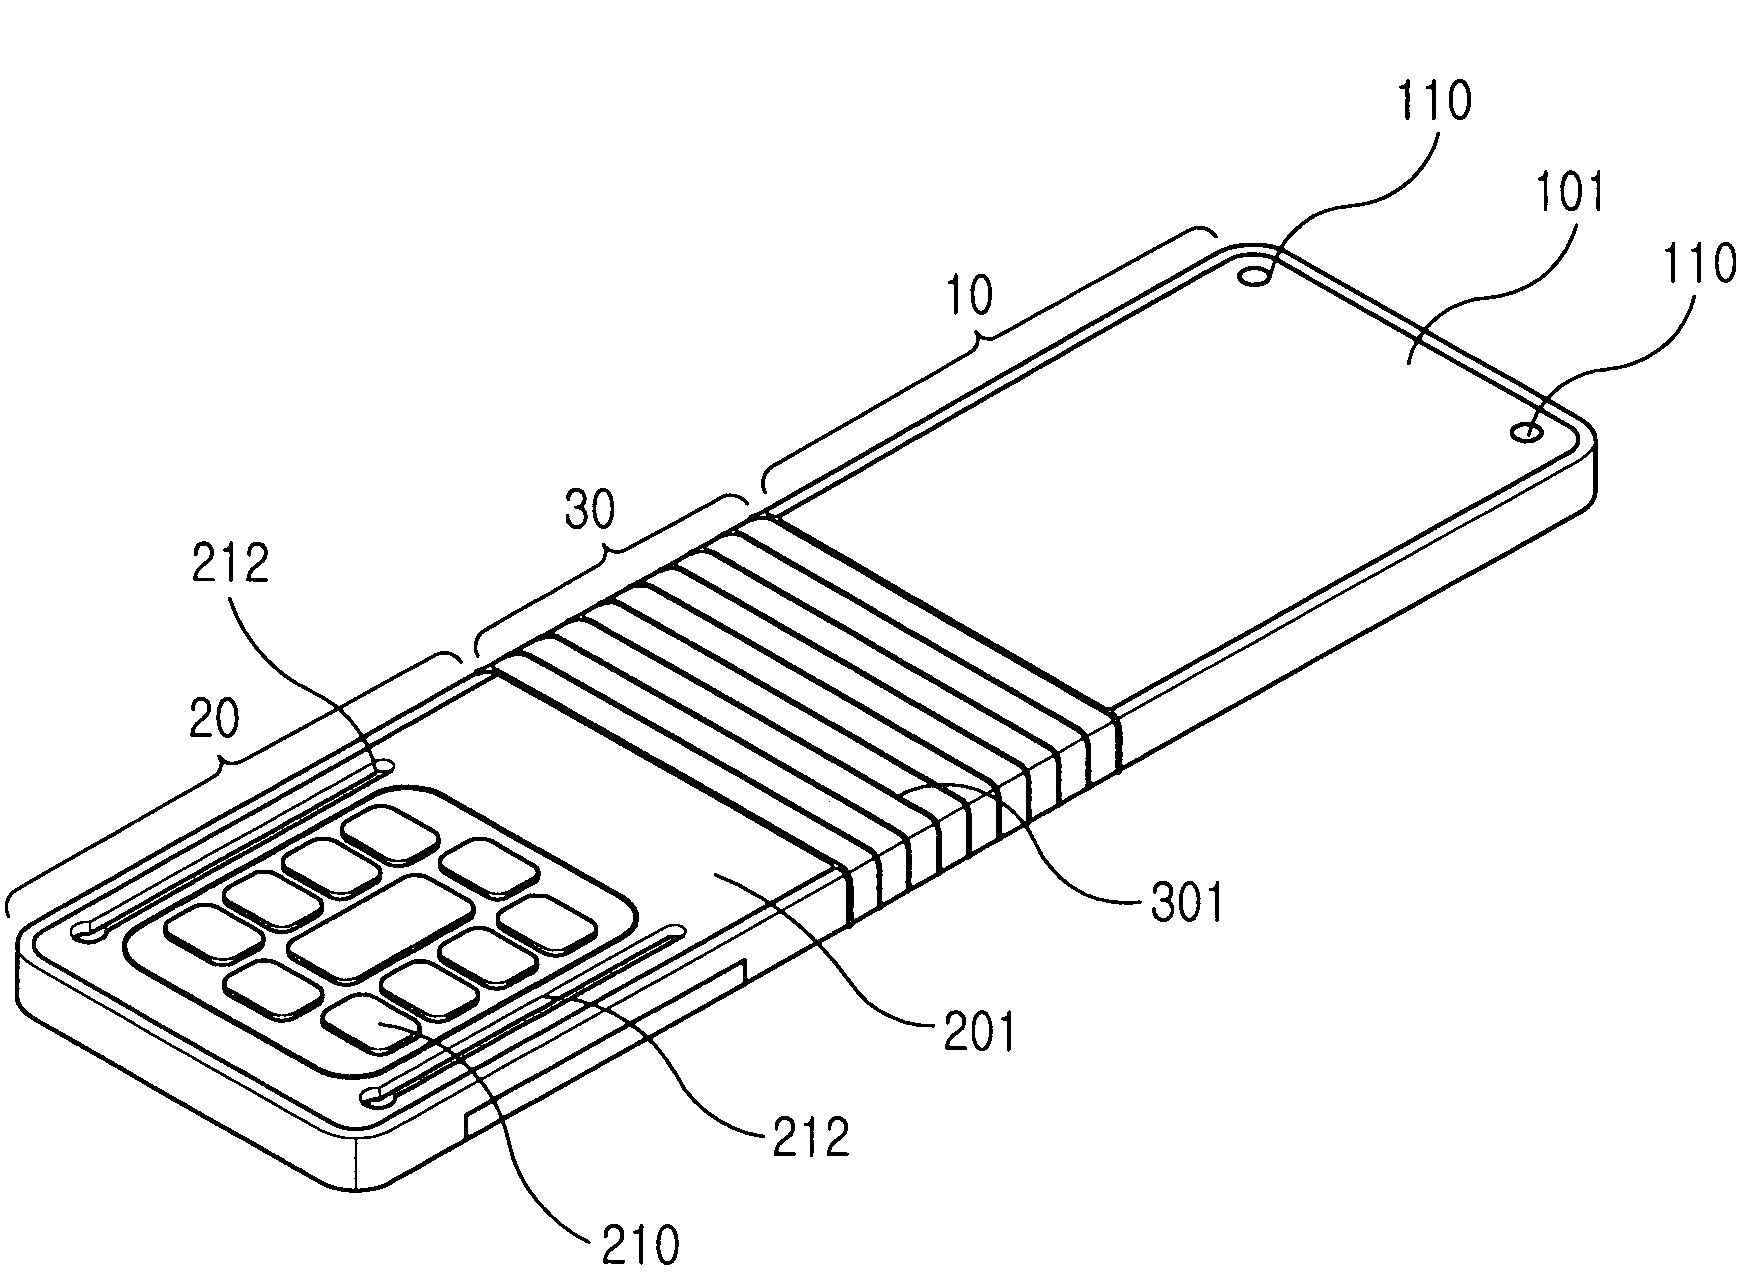 Slide-type portable terminal using flexible material